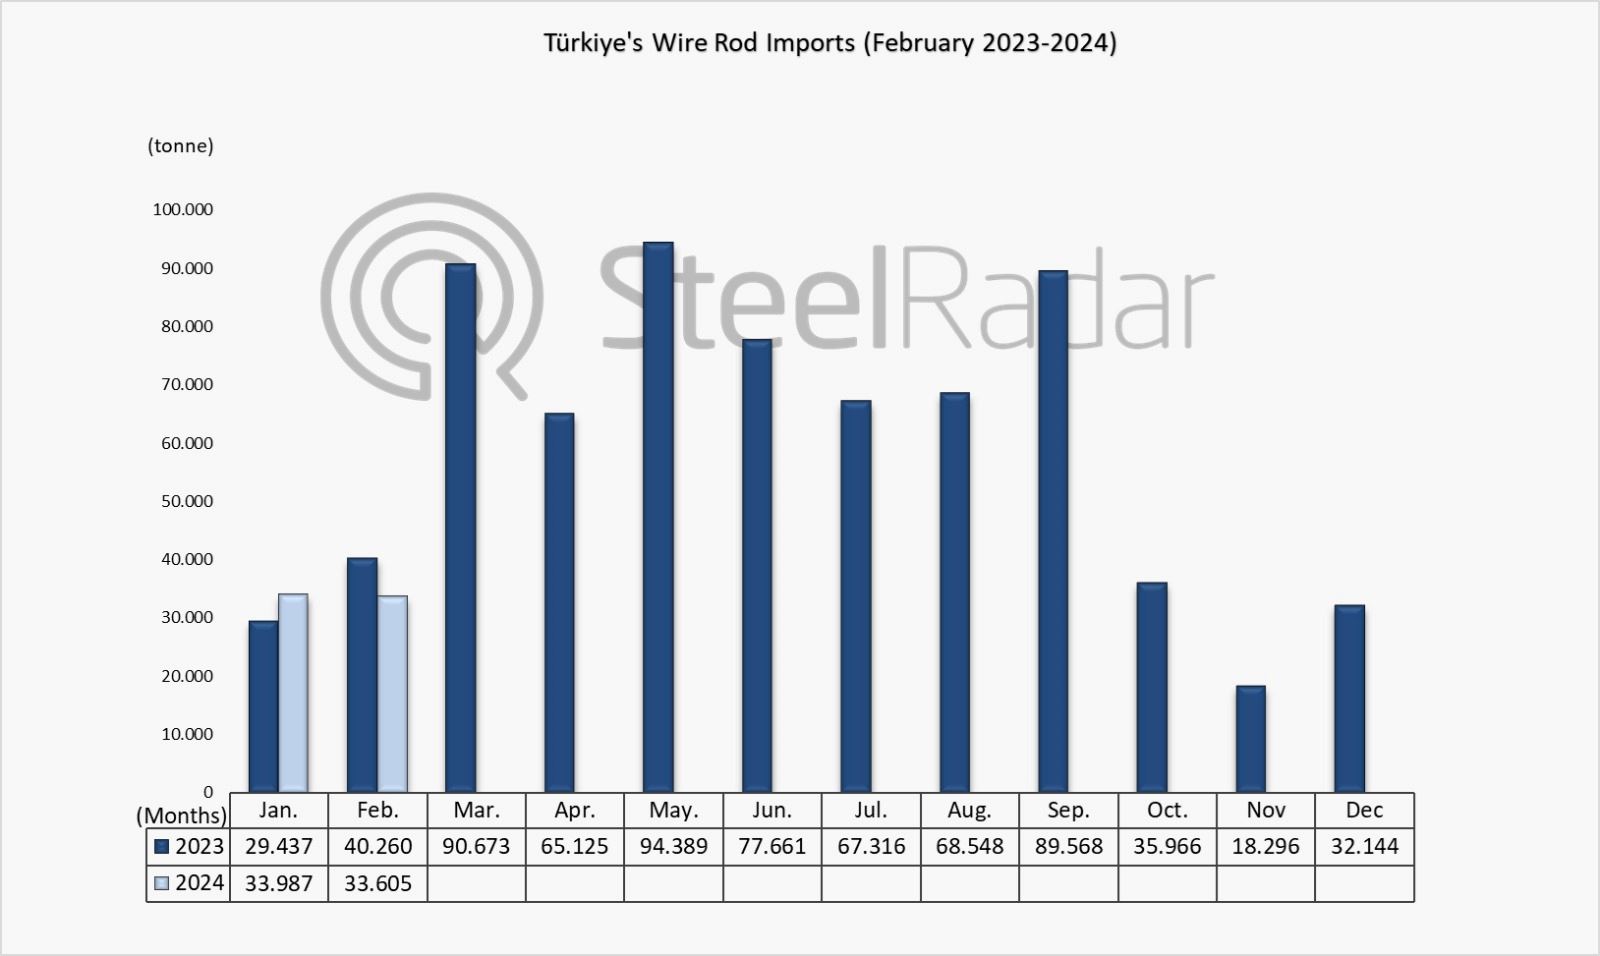 Wire rod imports of Türkiye decreased by 16.5% in February